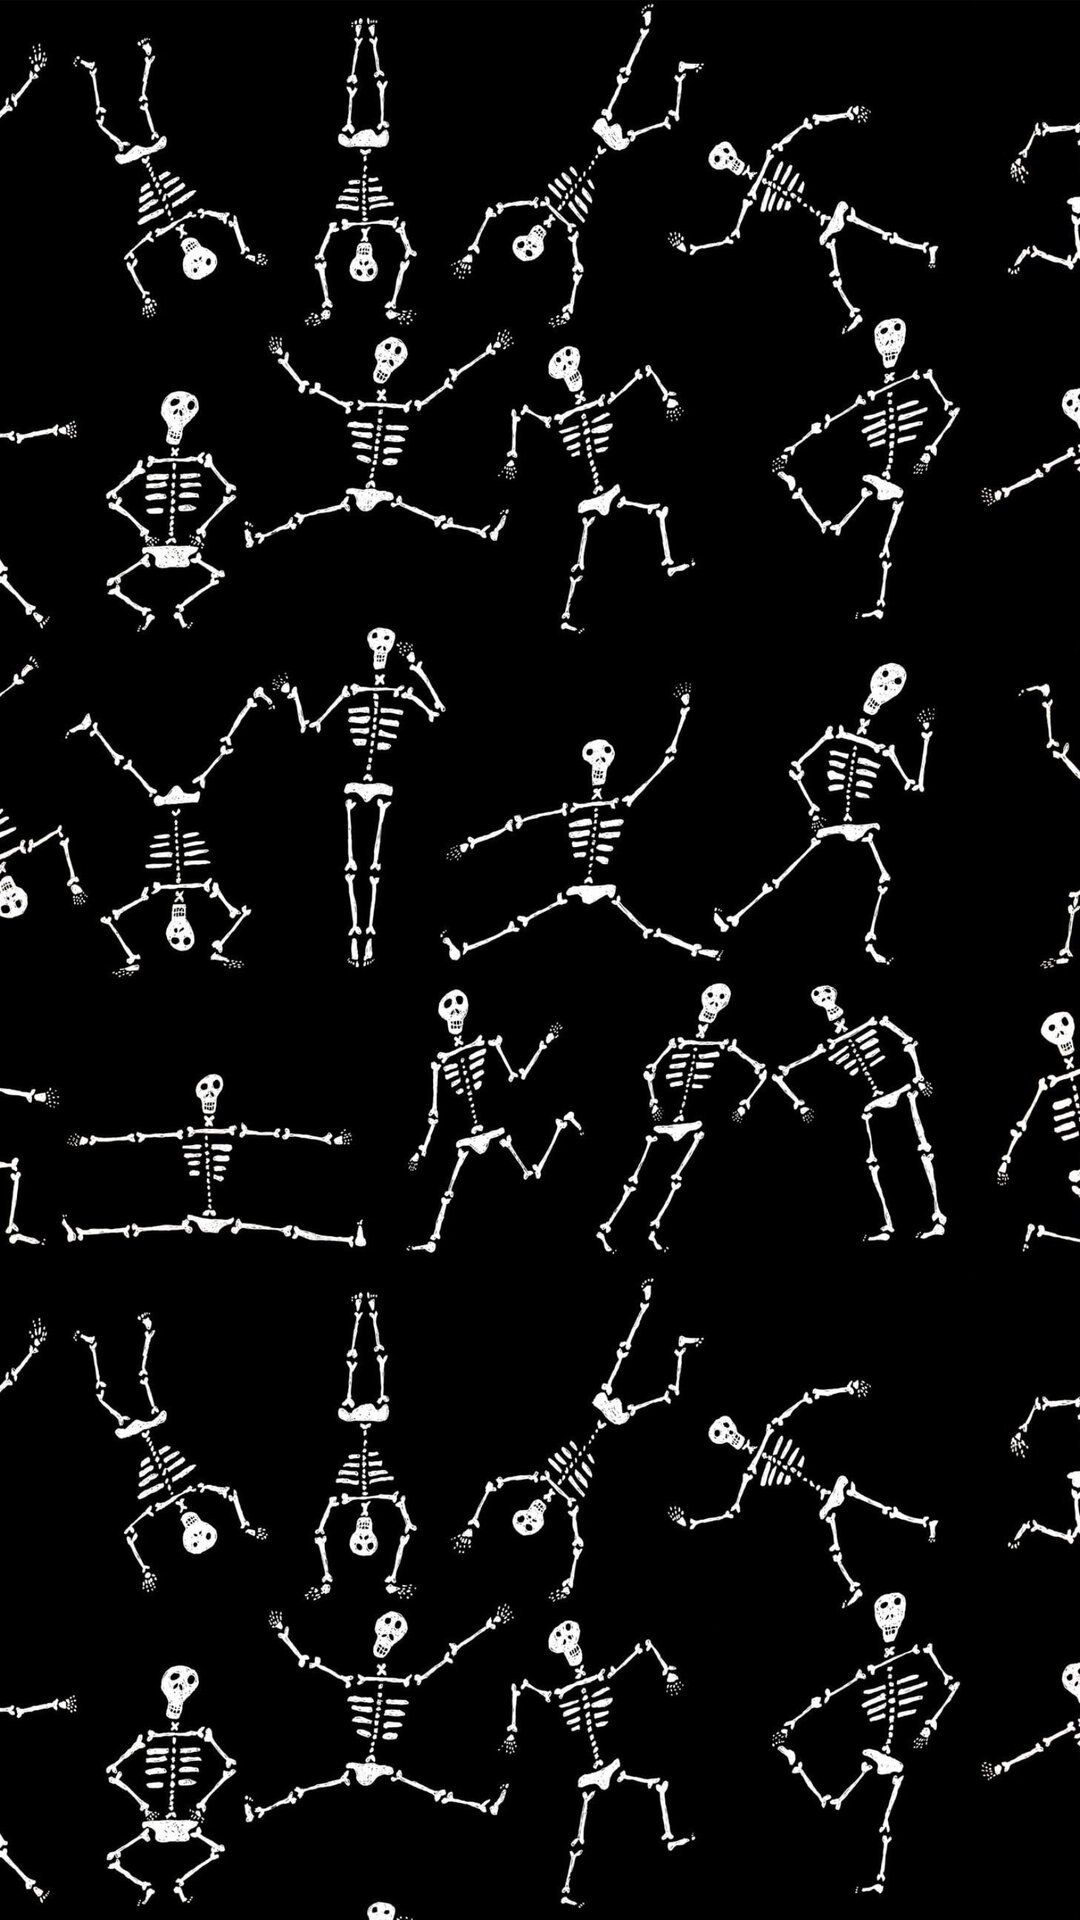 A black and white pattern of skeletons dancing - Skeleton